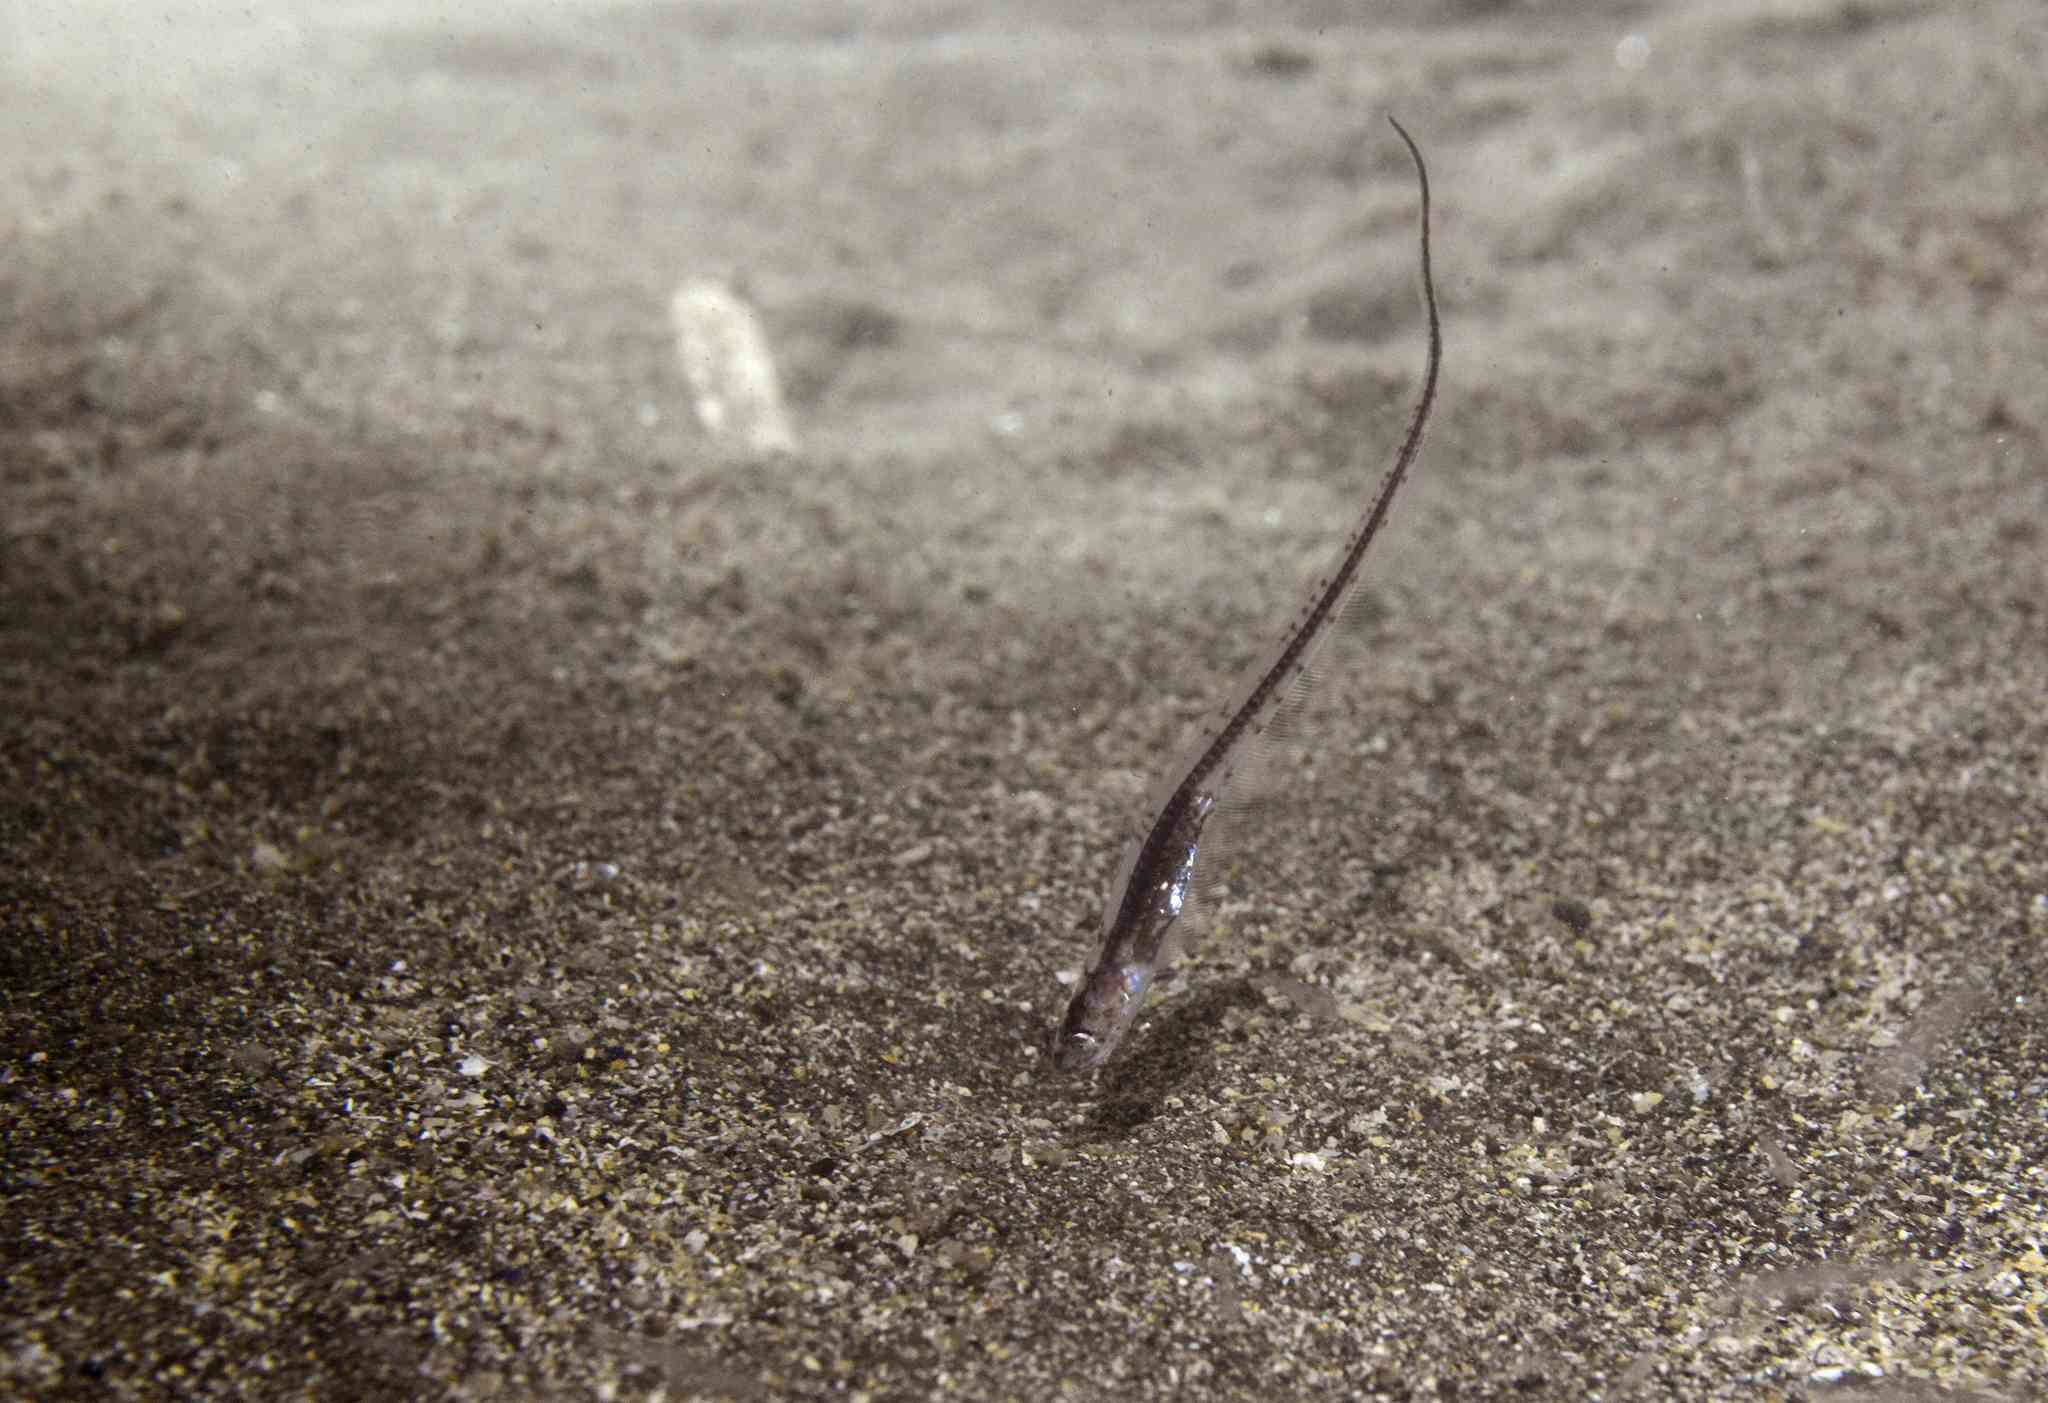 Image of Pearl Fish